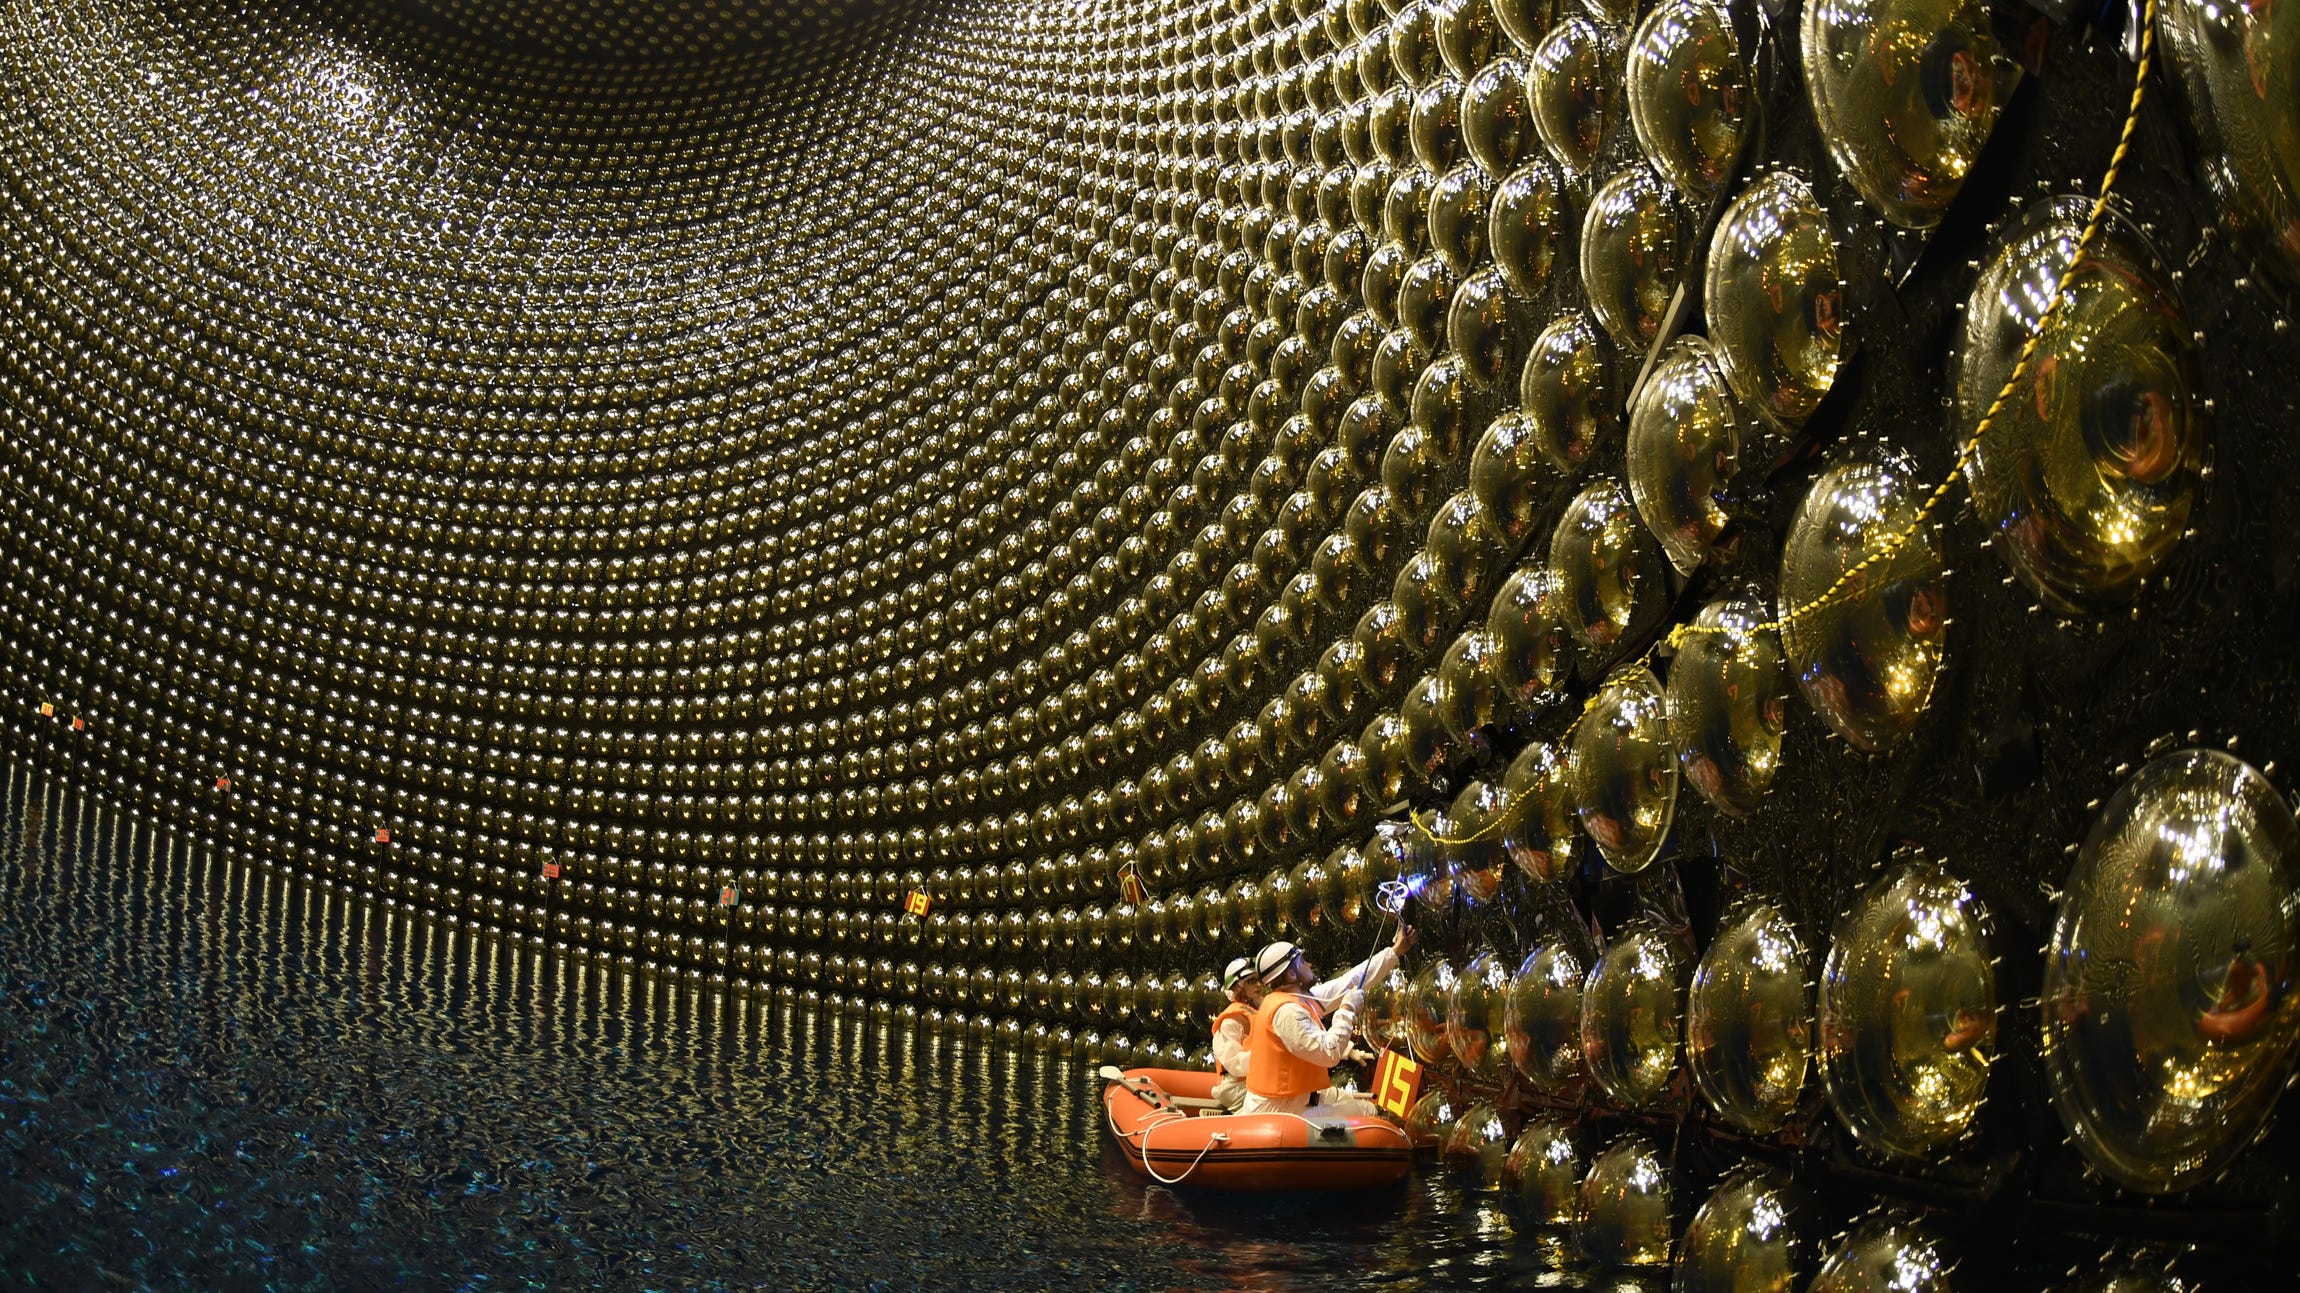 The detection chamber, full of spherical balls, of the Super-Kamiokande neutrino experiment in Japan